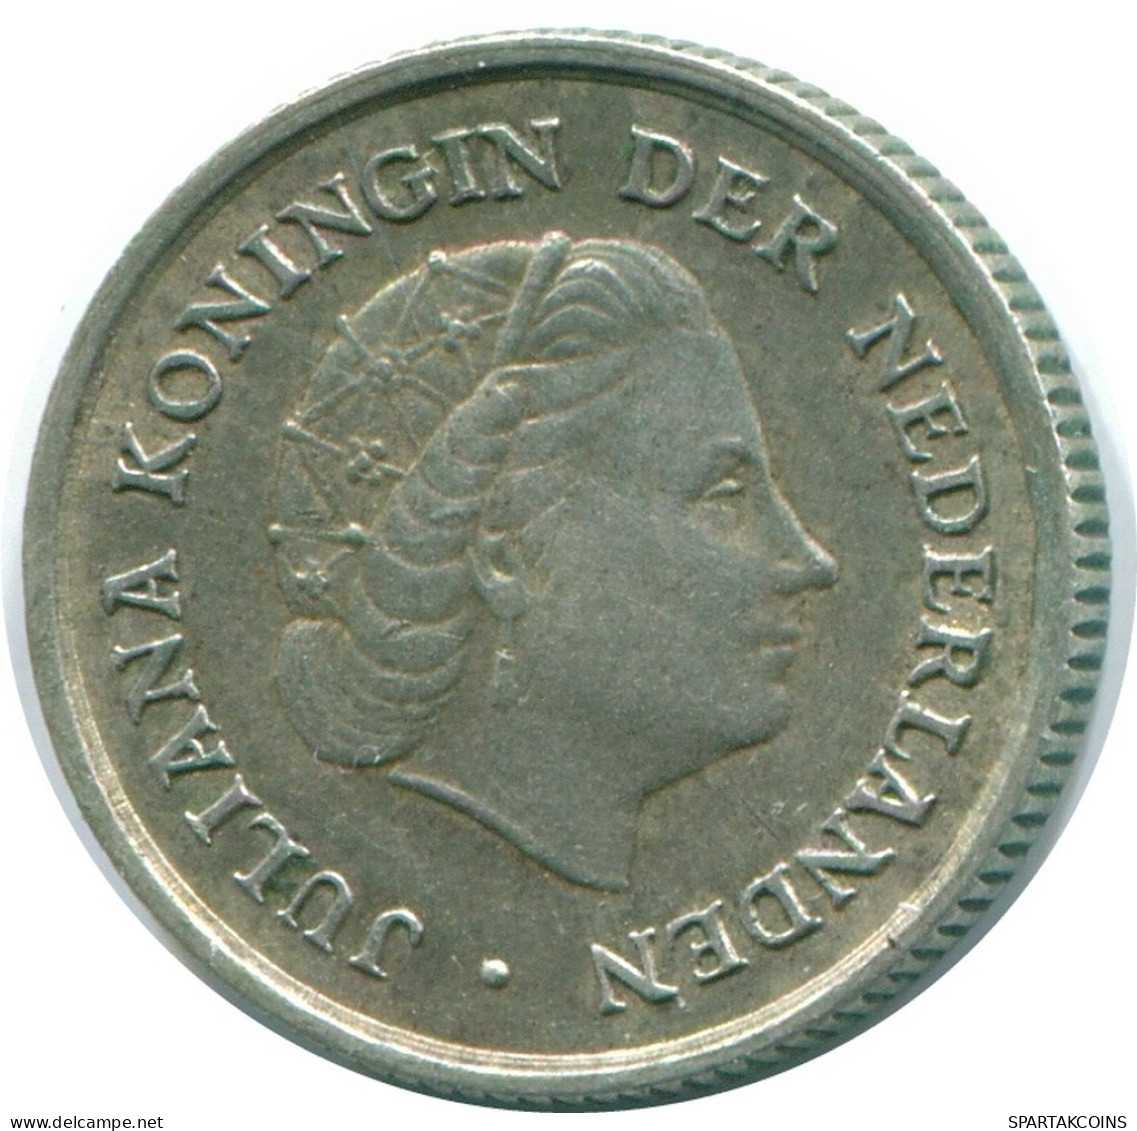 1/10 GULDEN 1963 NETHERLANDS ANTILLES SILVER Colonial Coin #NL12515.3.U.A - Niederländische Antillen